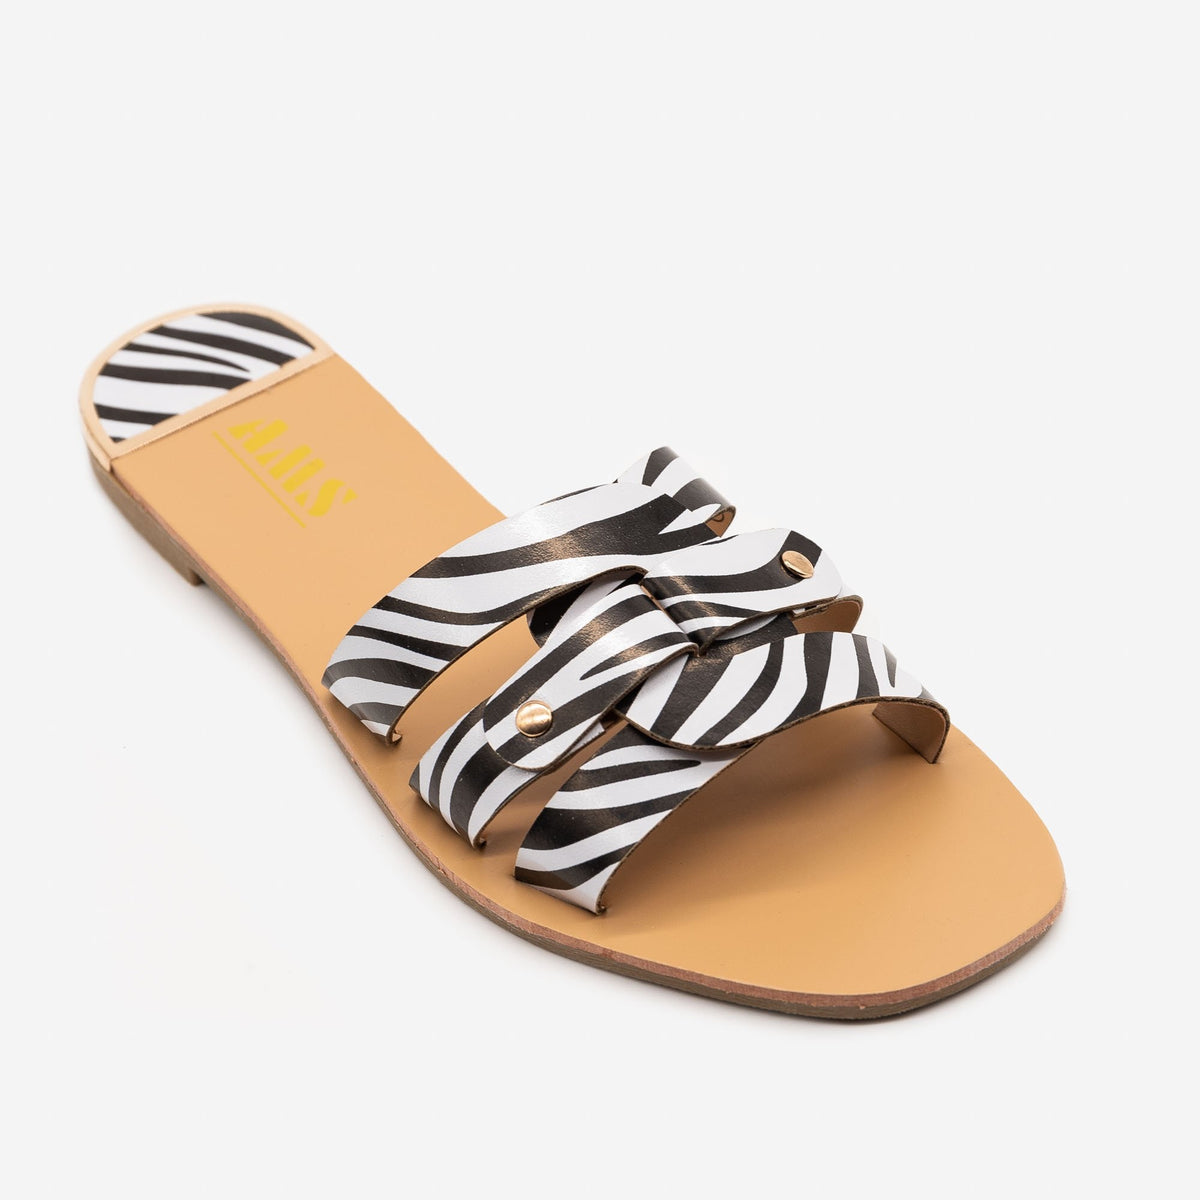 animal print sandals for women